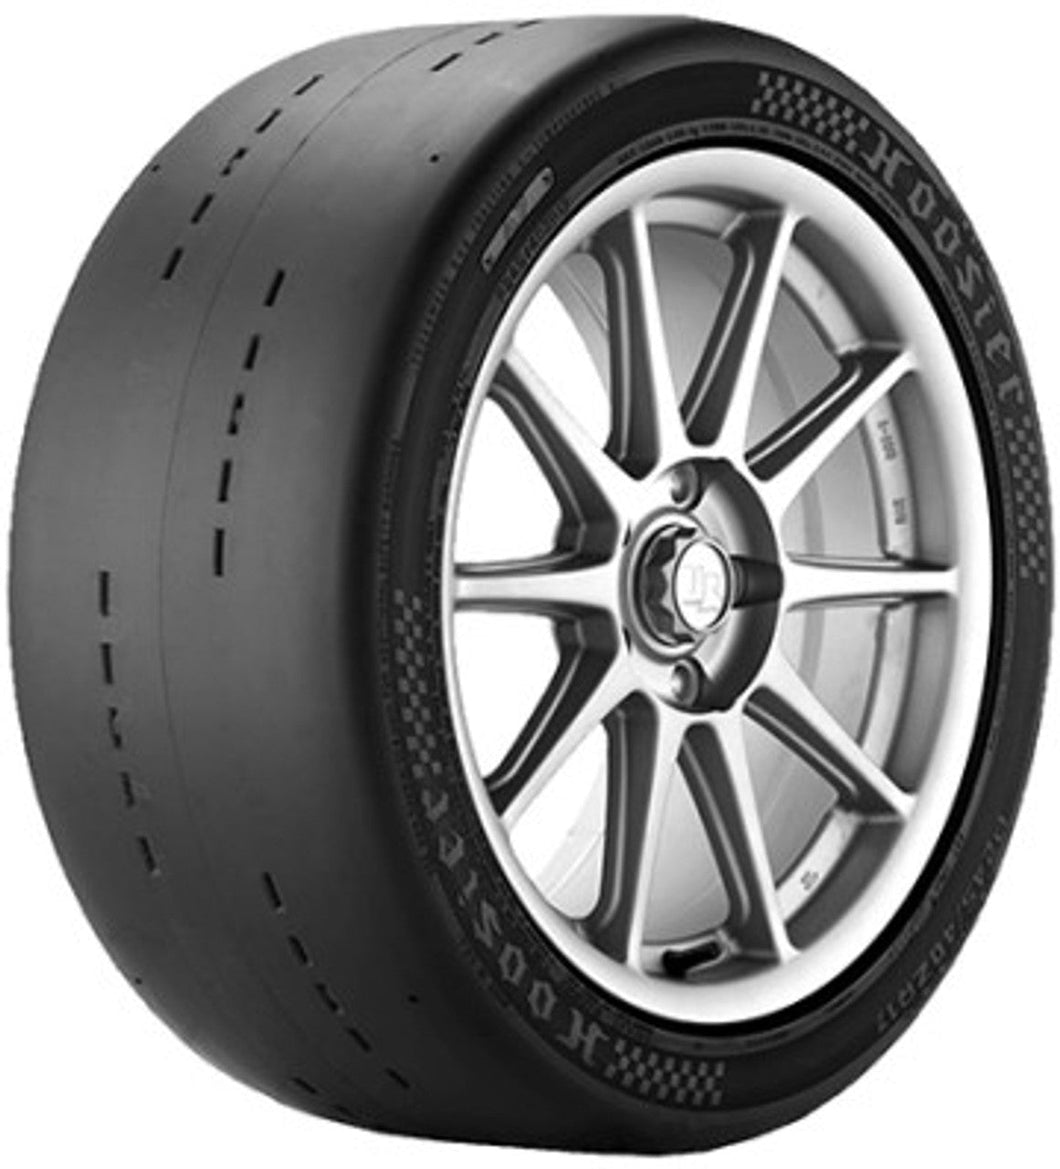 245/40 ZR15 Hoosier Tire Slick D.O.T Neumático